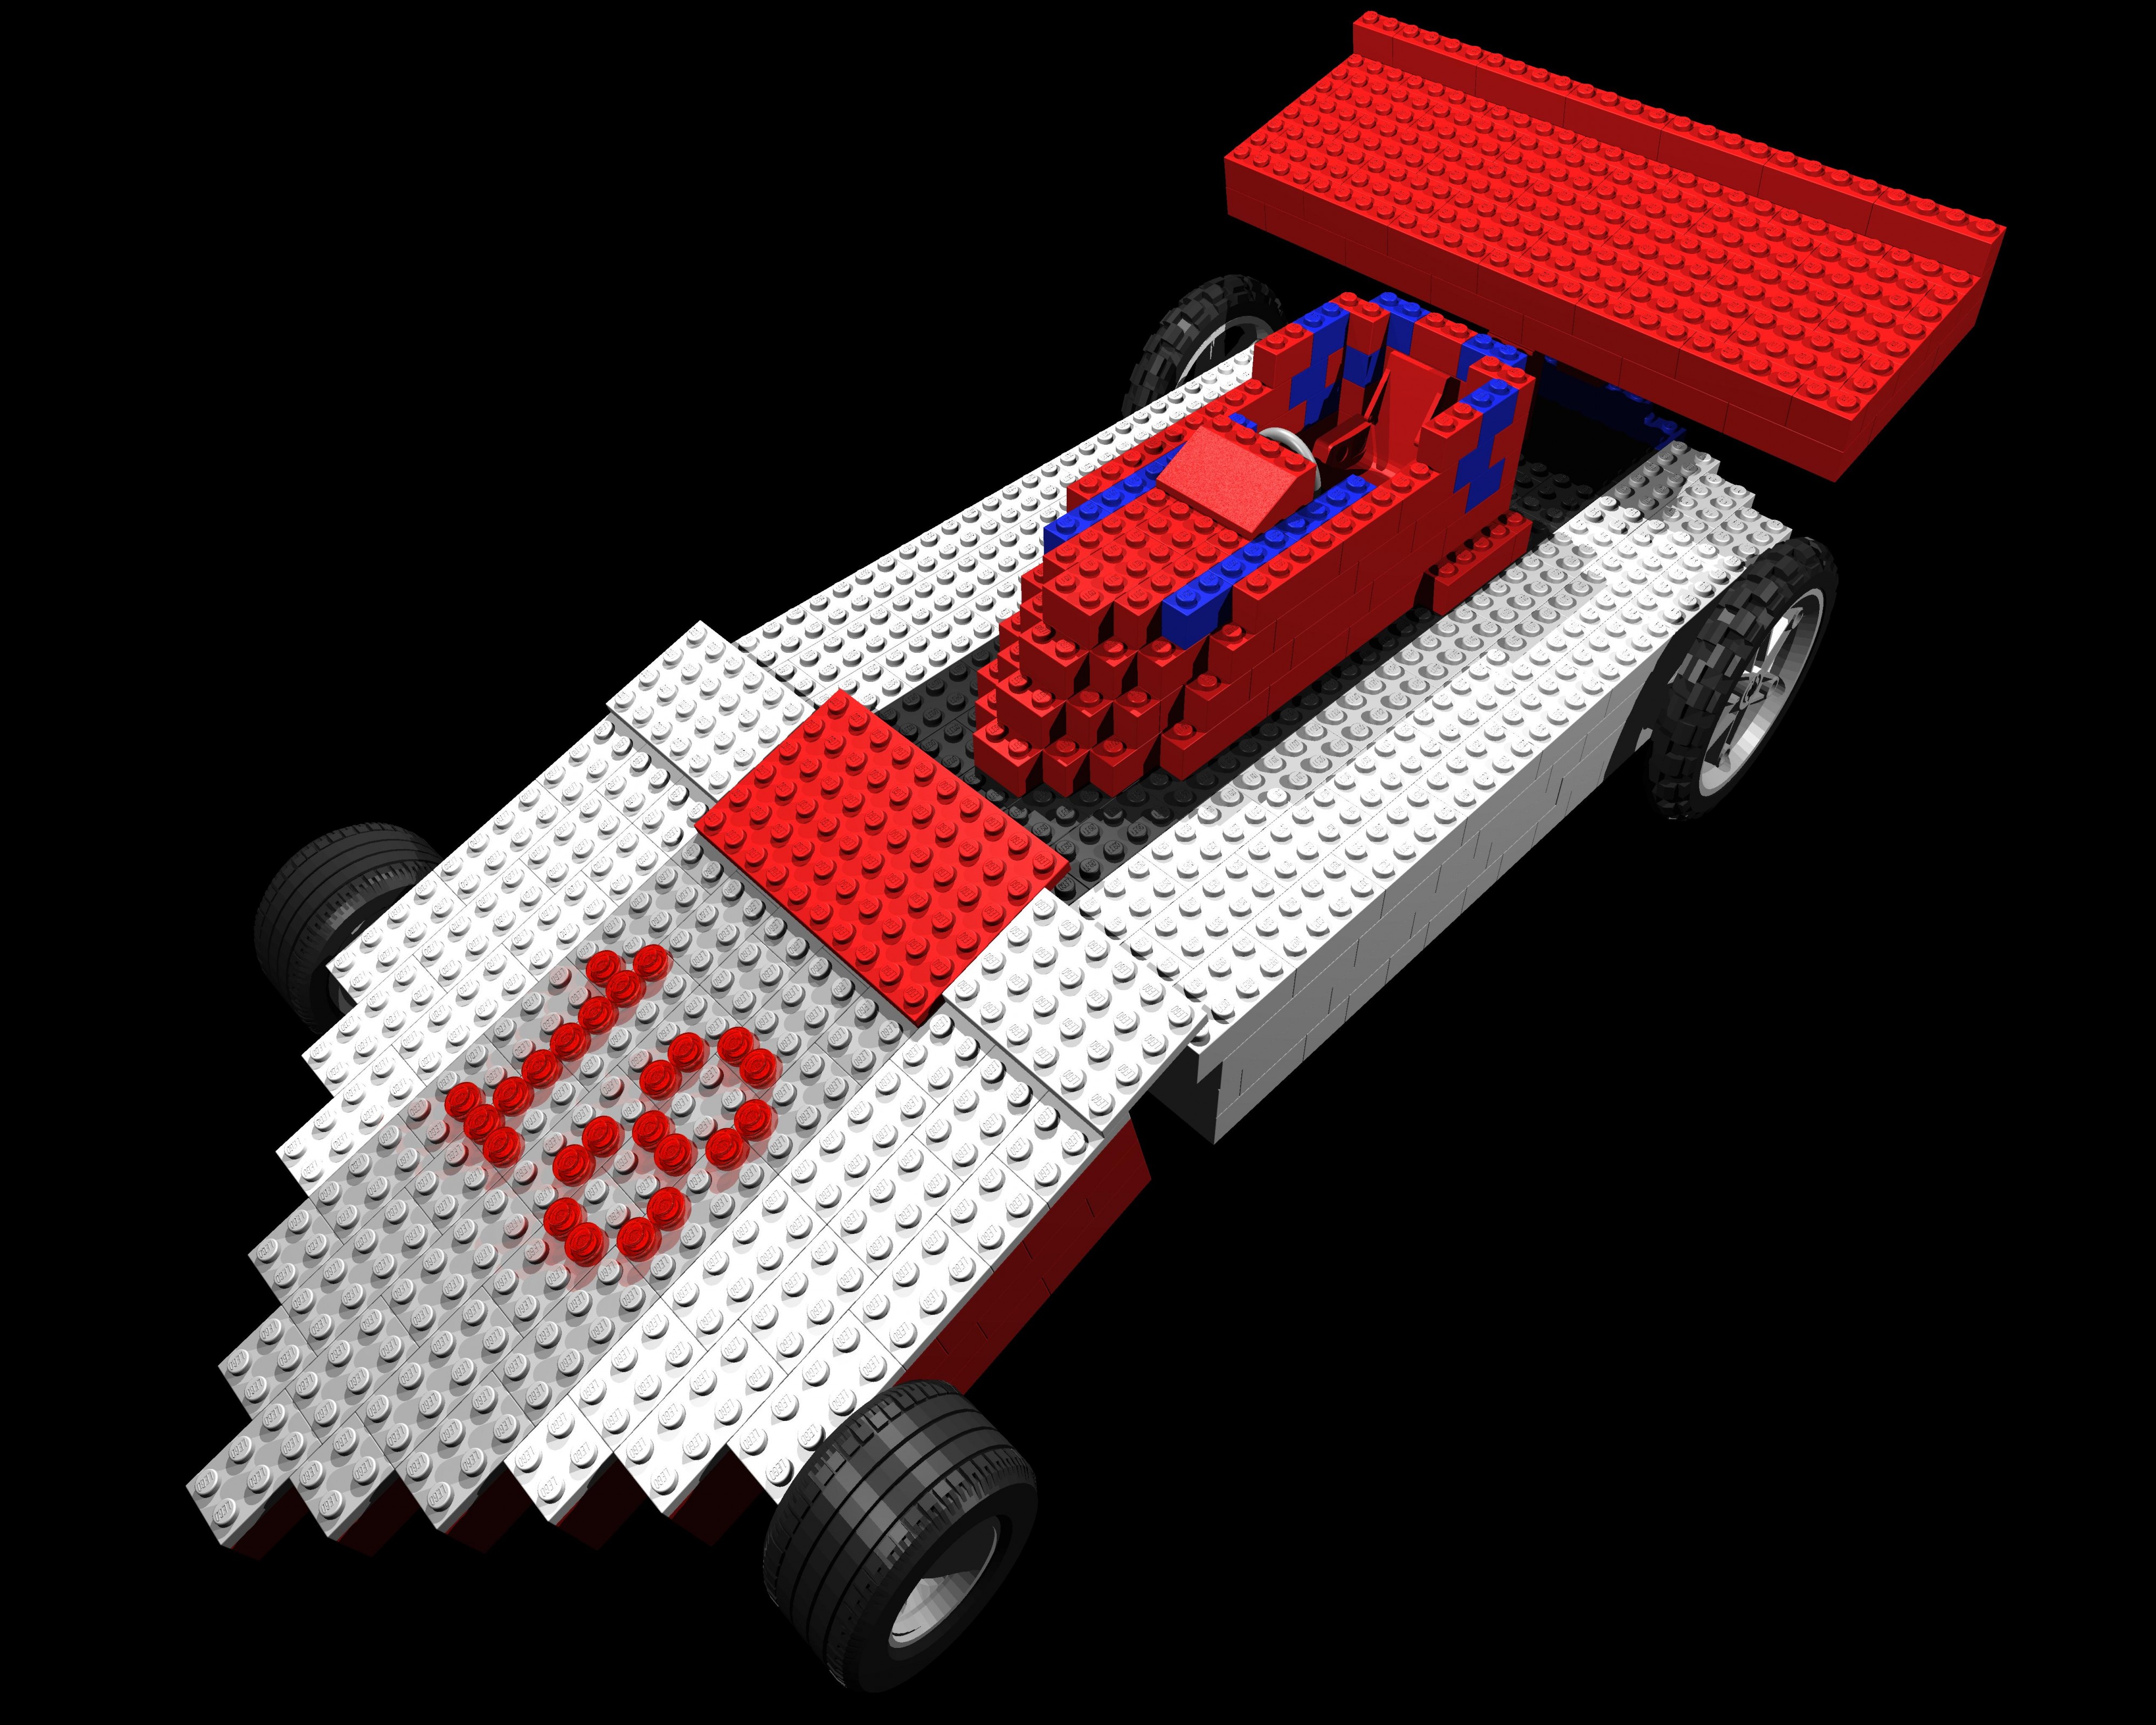 Lego CAD Racecar